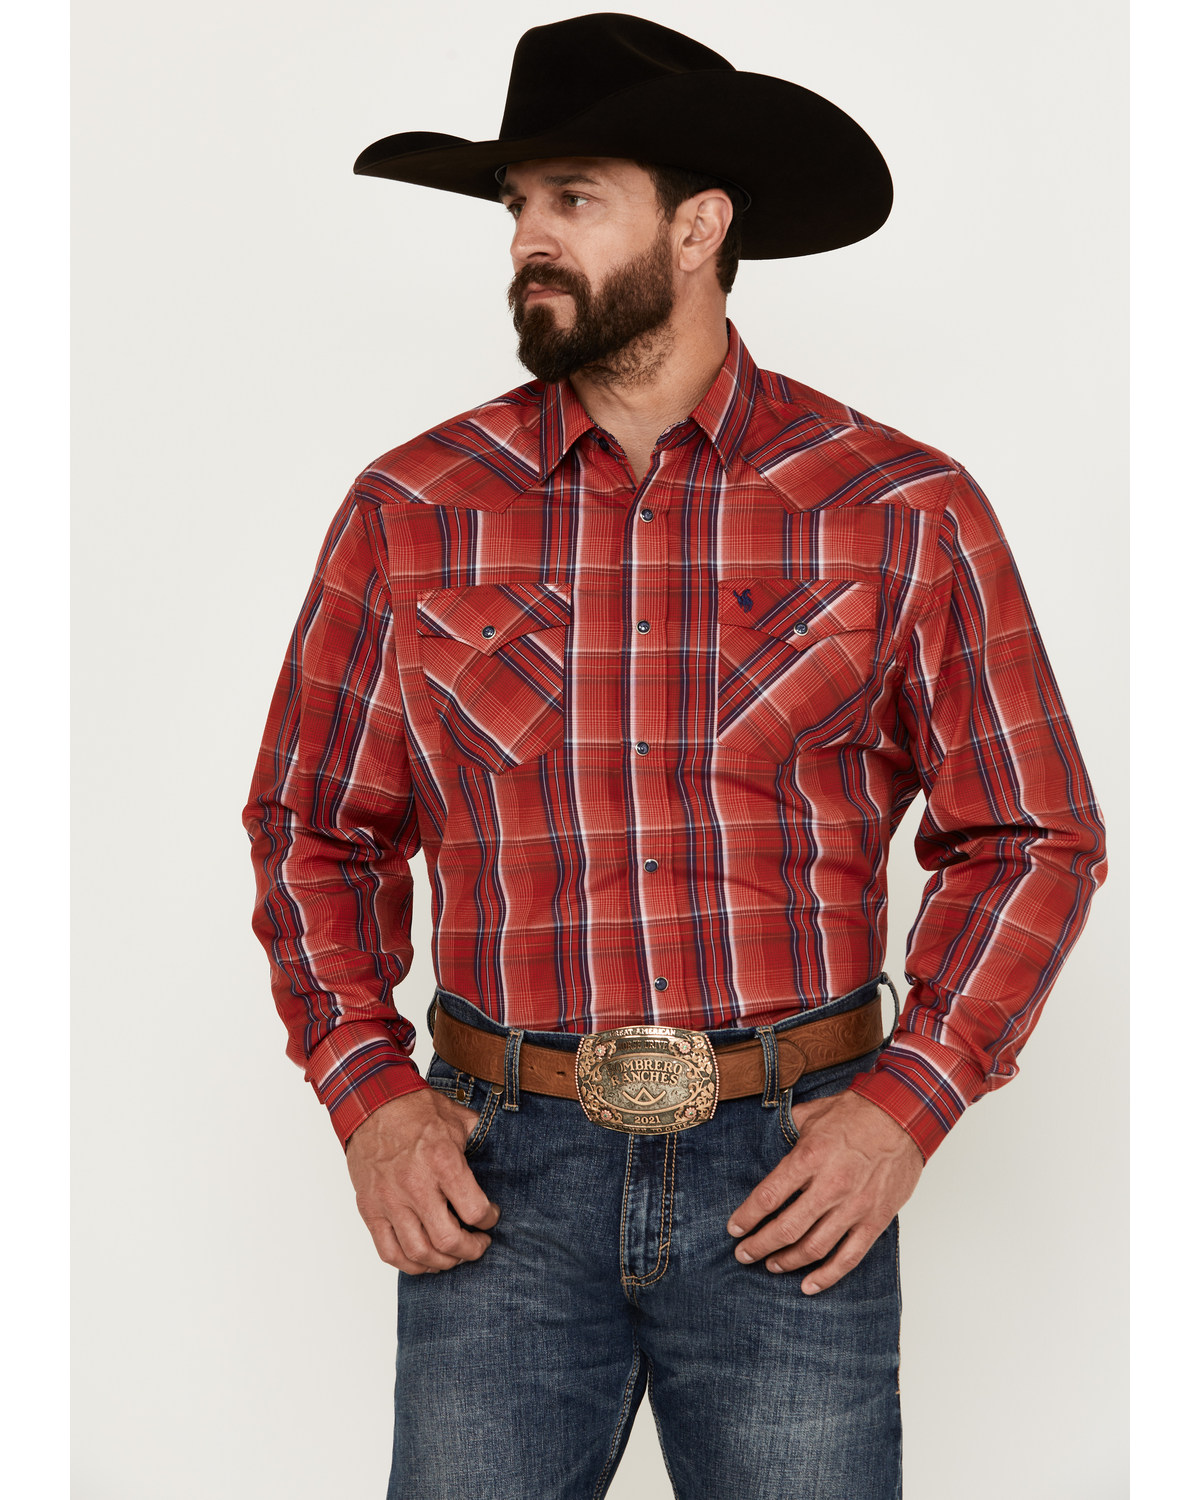 Rodeo Clothing Men's Plaid Print Long Sleeve Snap Western Shirt